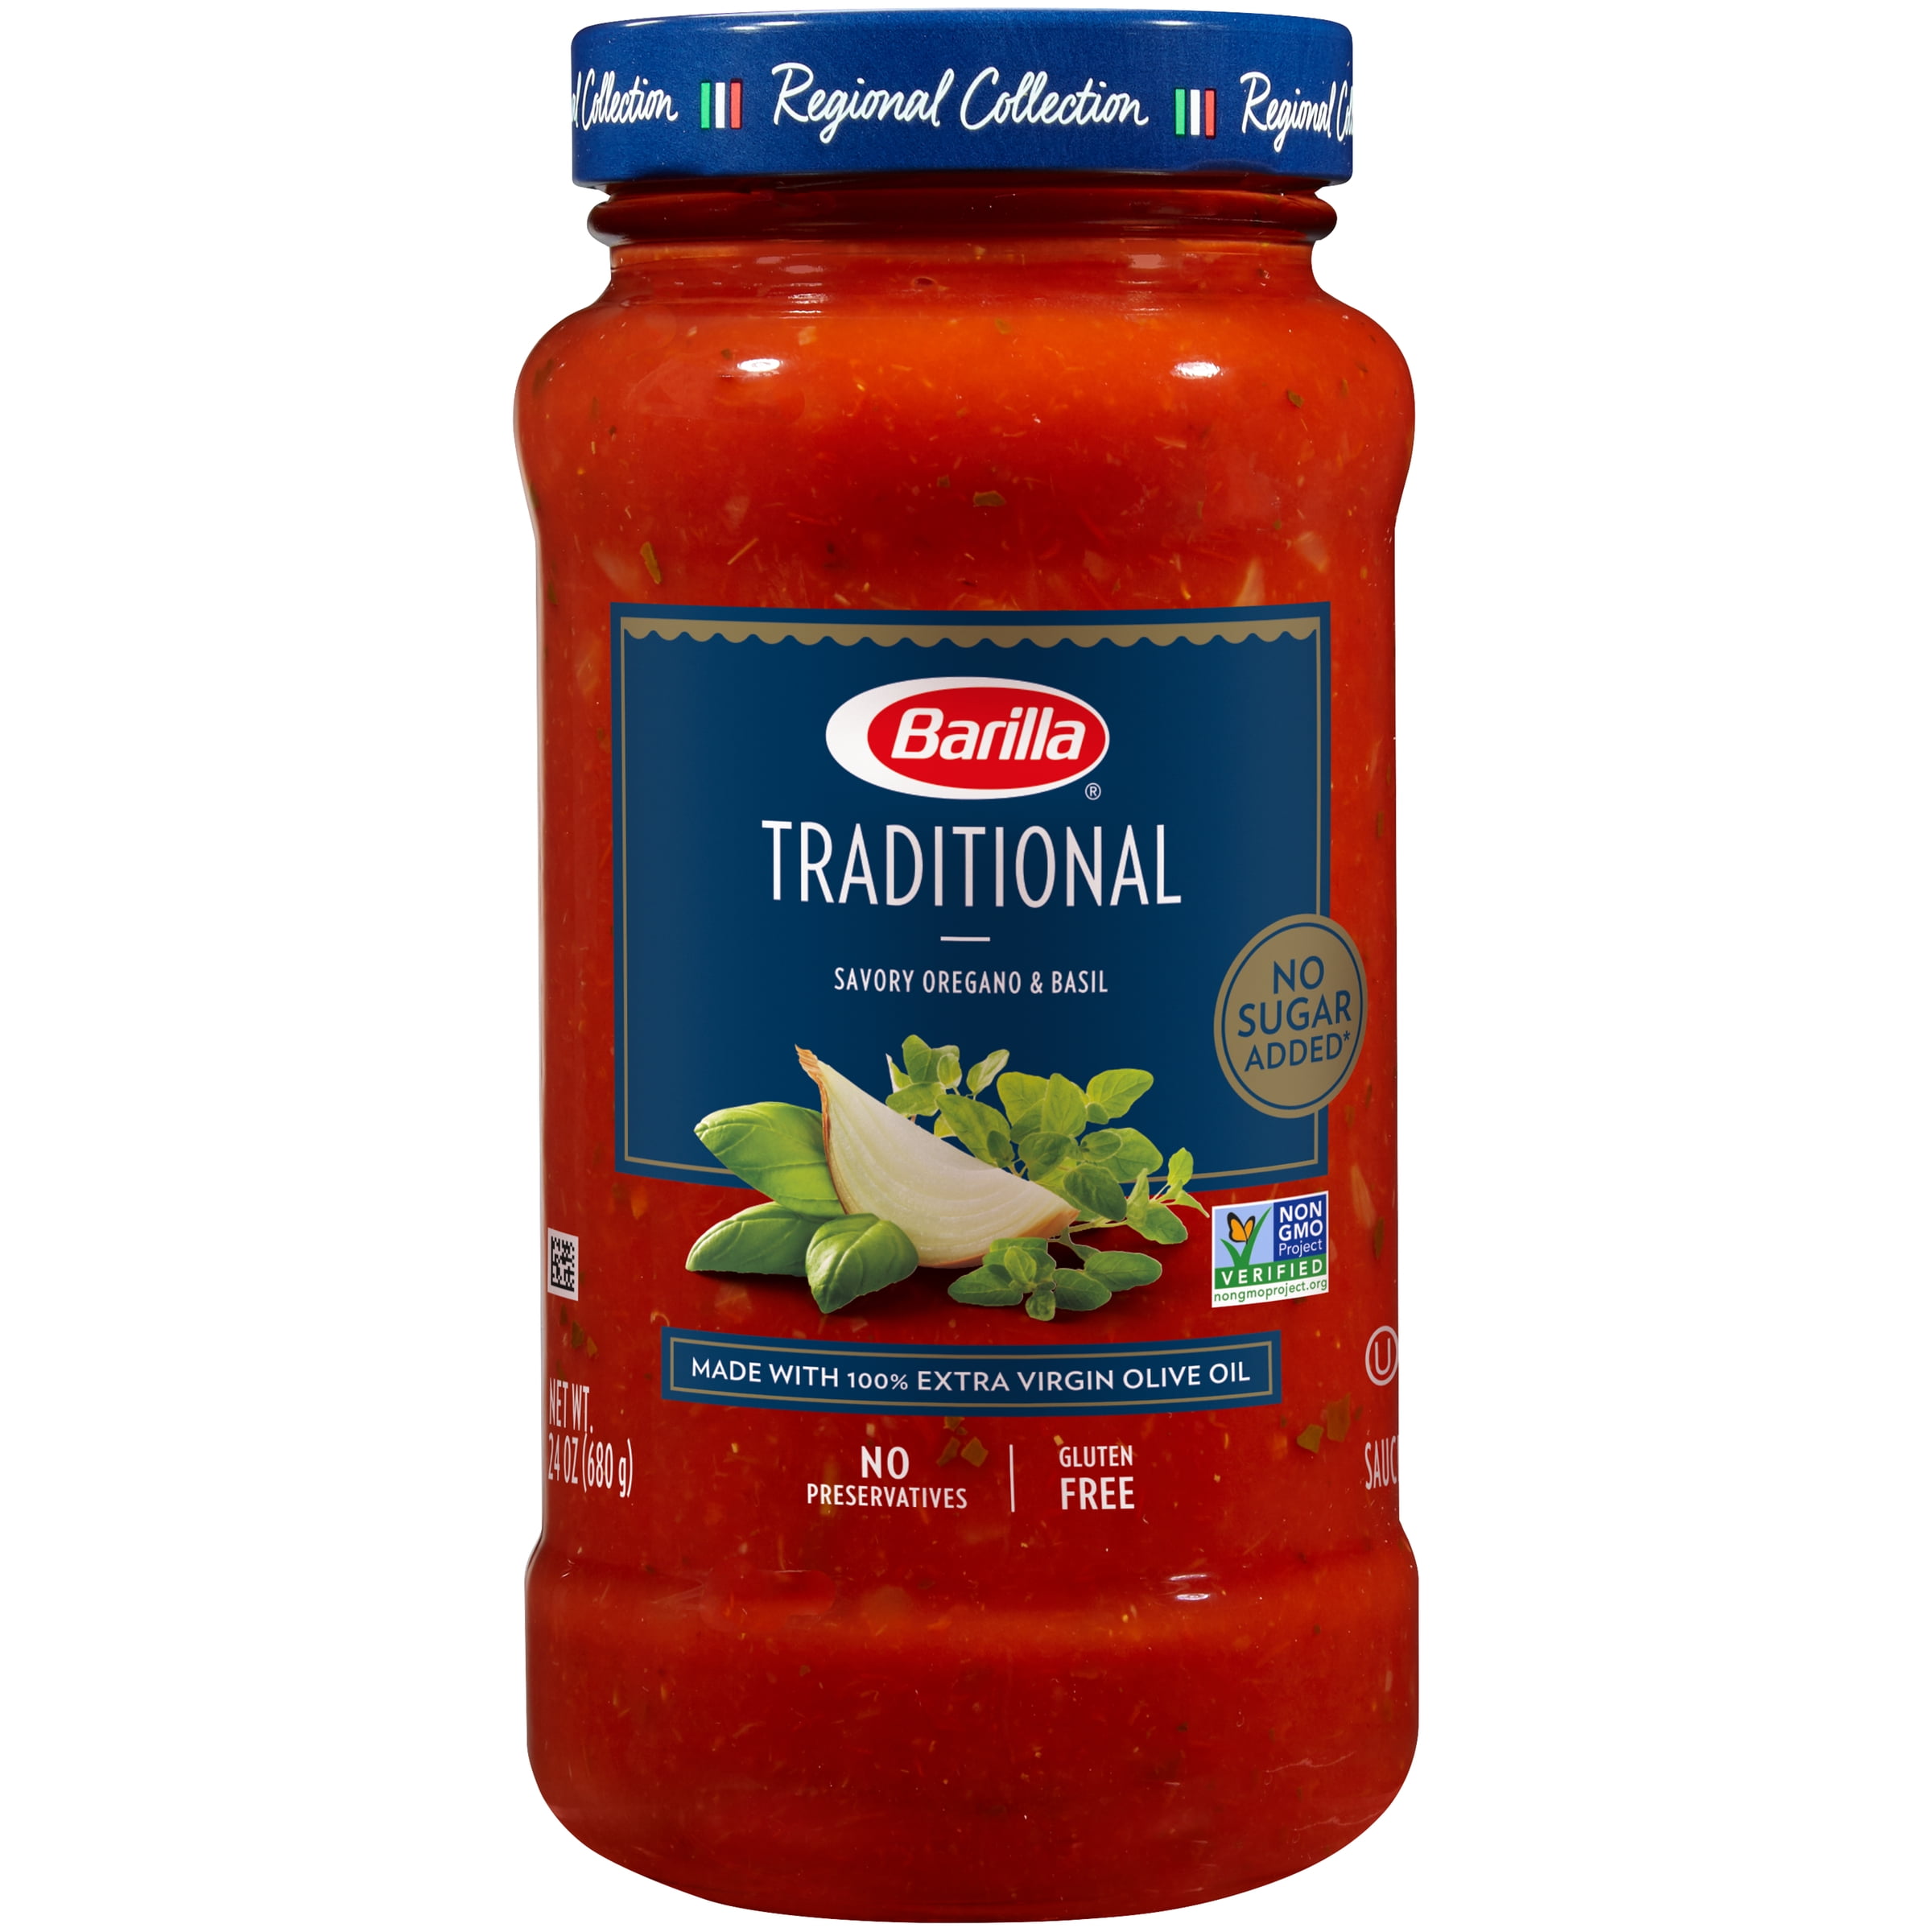 Barilla® Traditional Tomato Pasta Sauce 24 oz - Walmart.com - Walmart.com